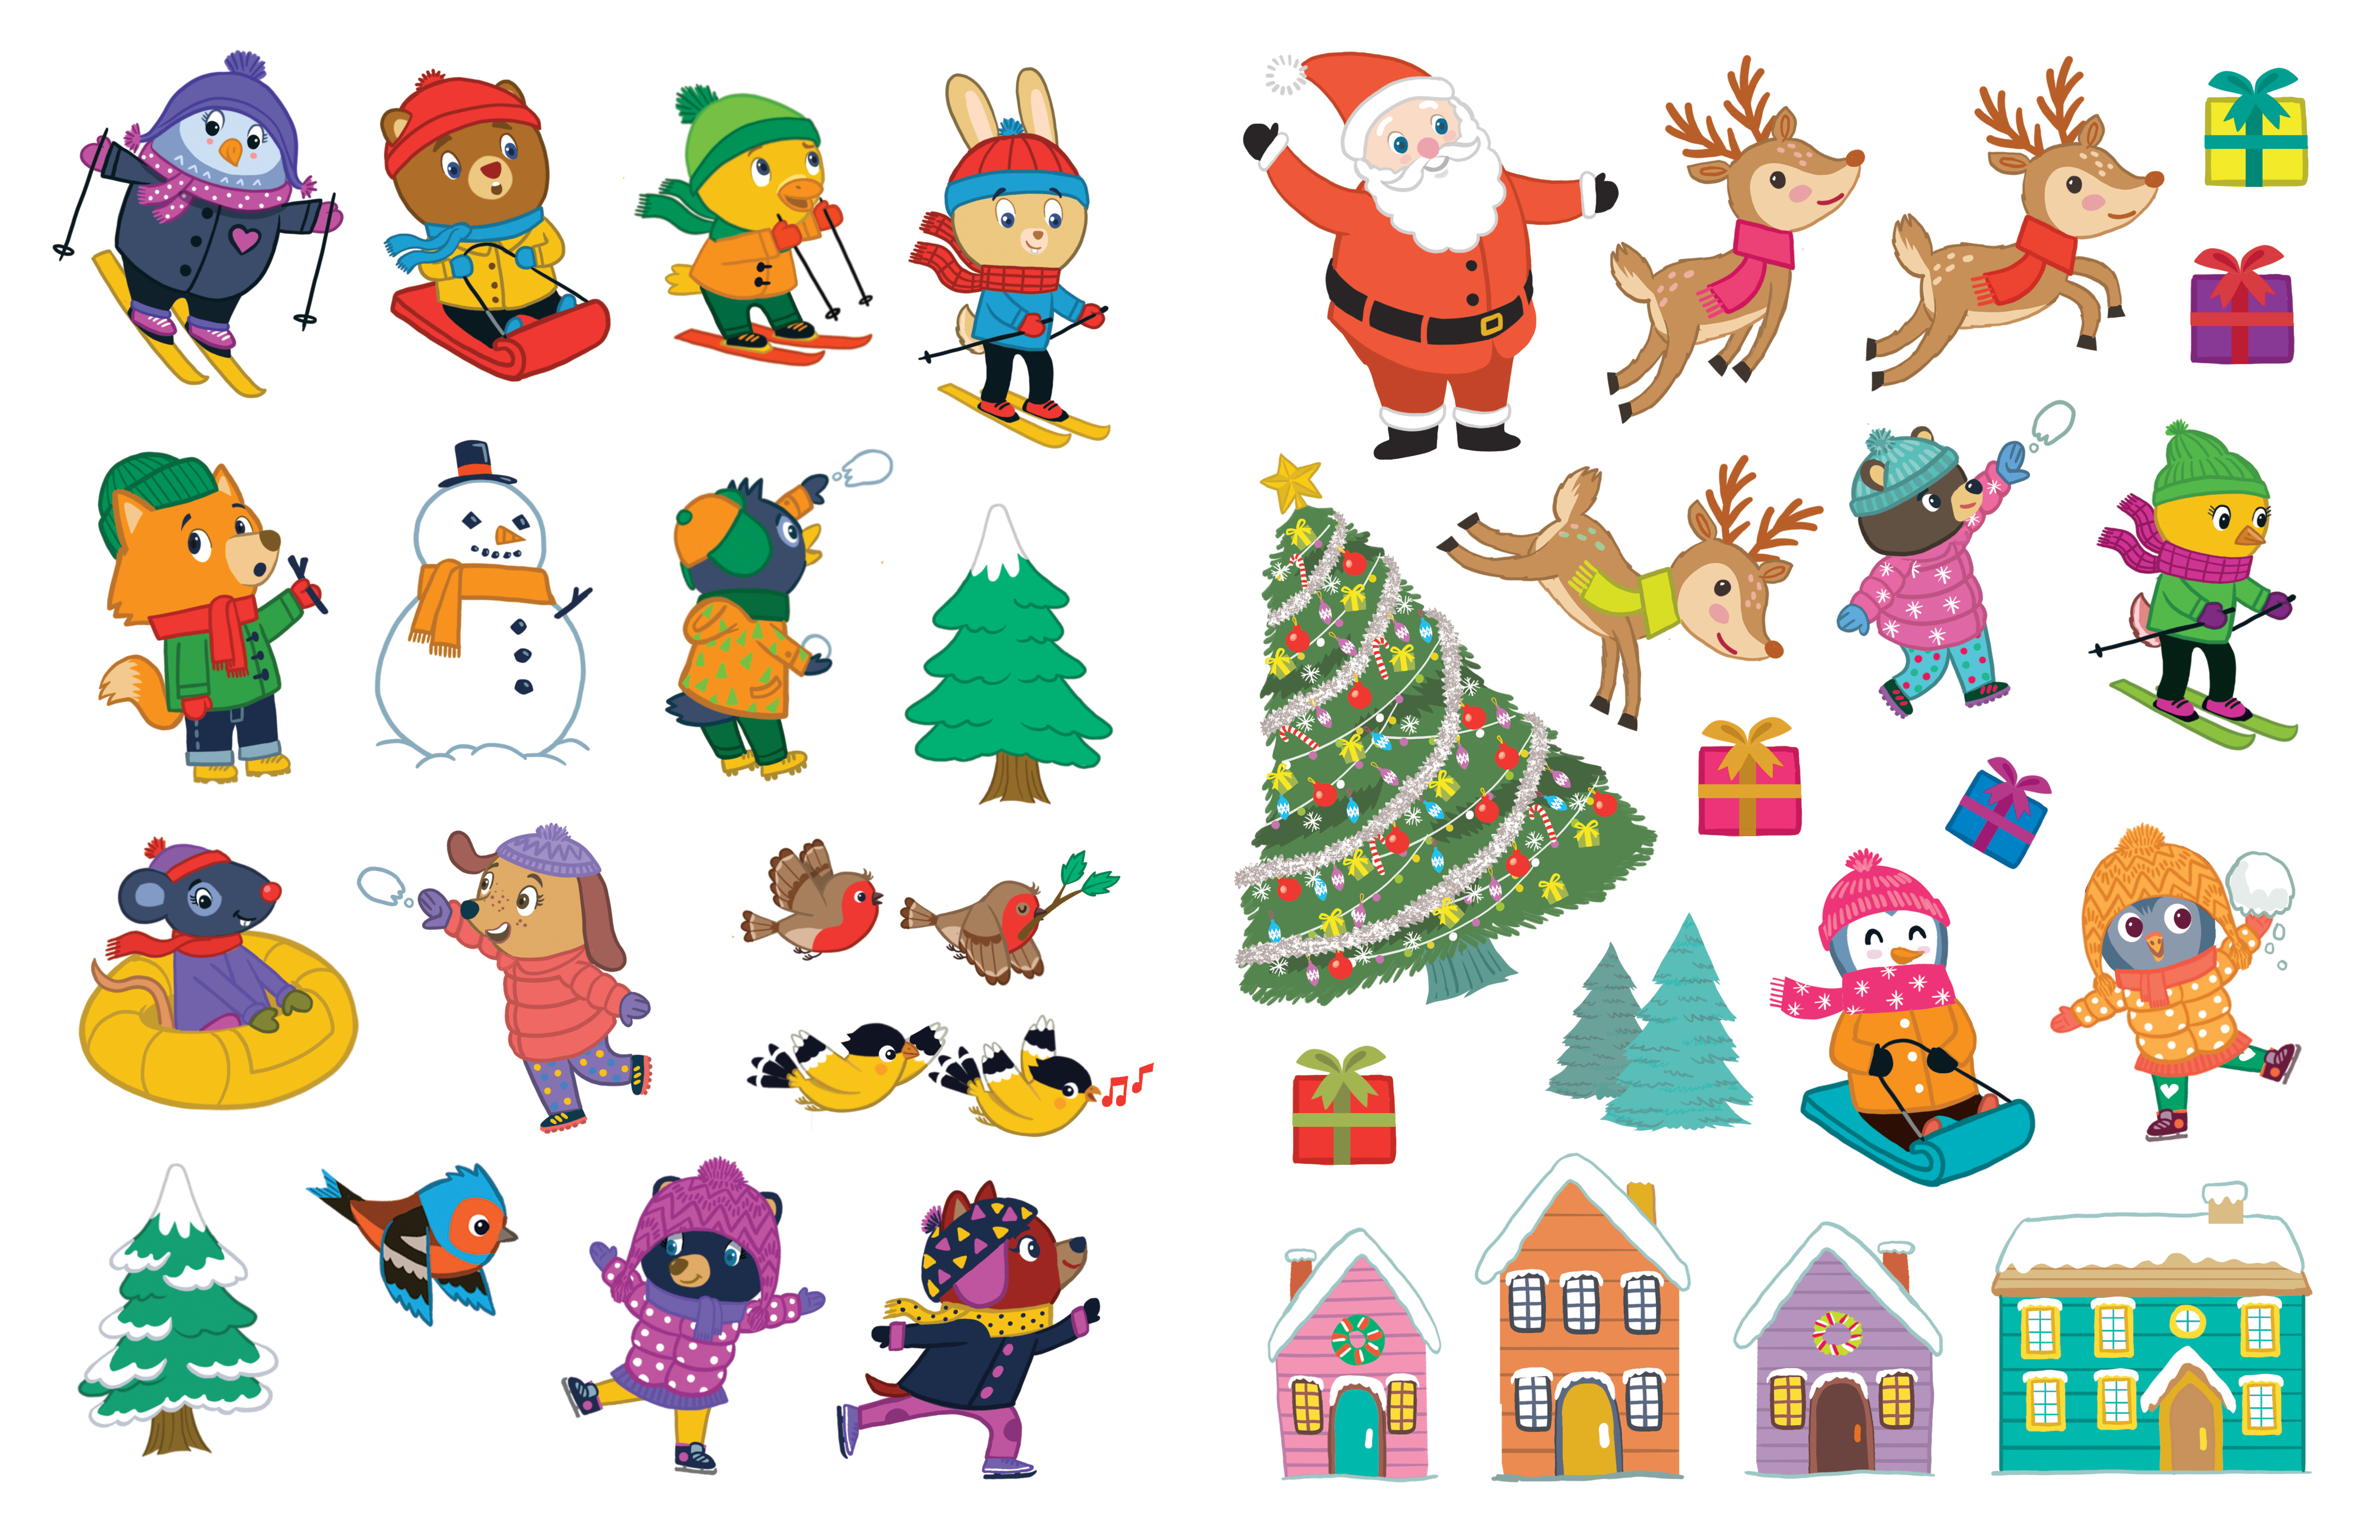 Jumbo Stickers for Little Hands: Winter Wonderland